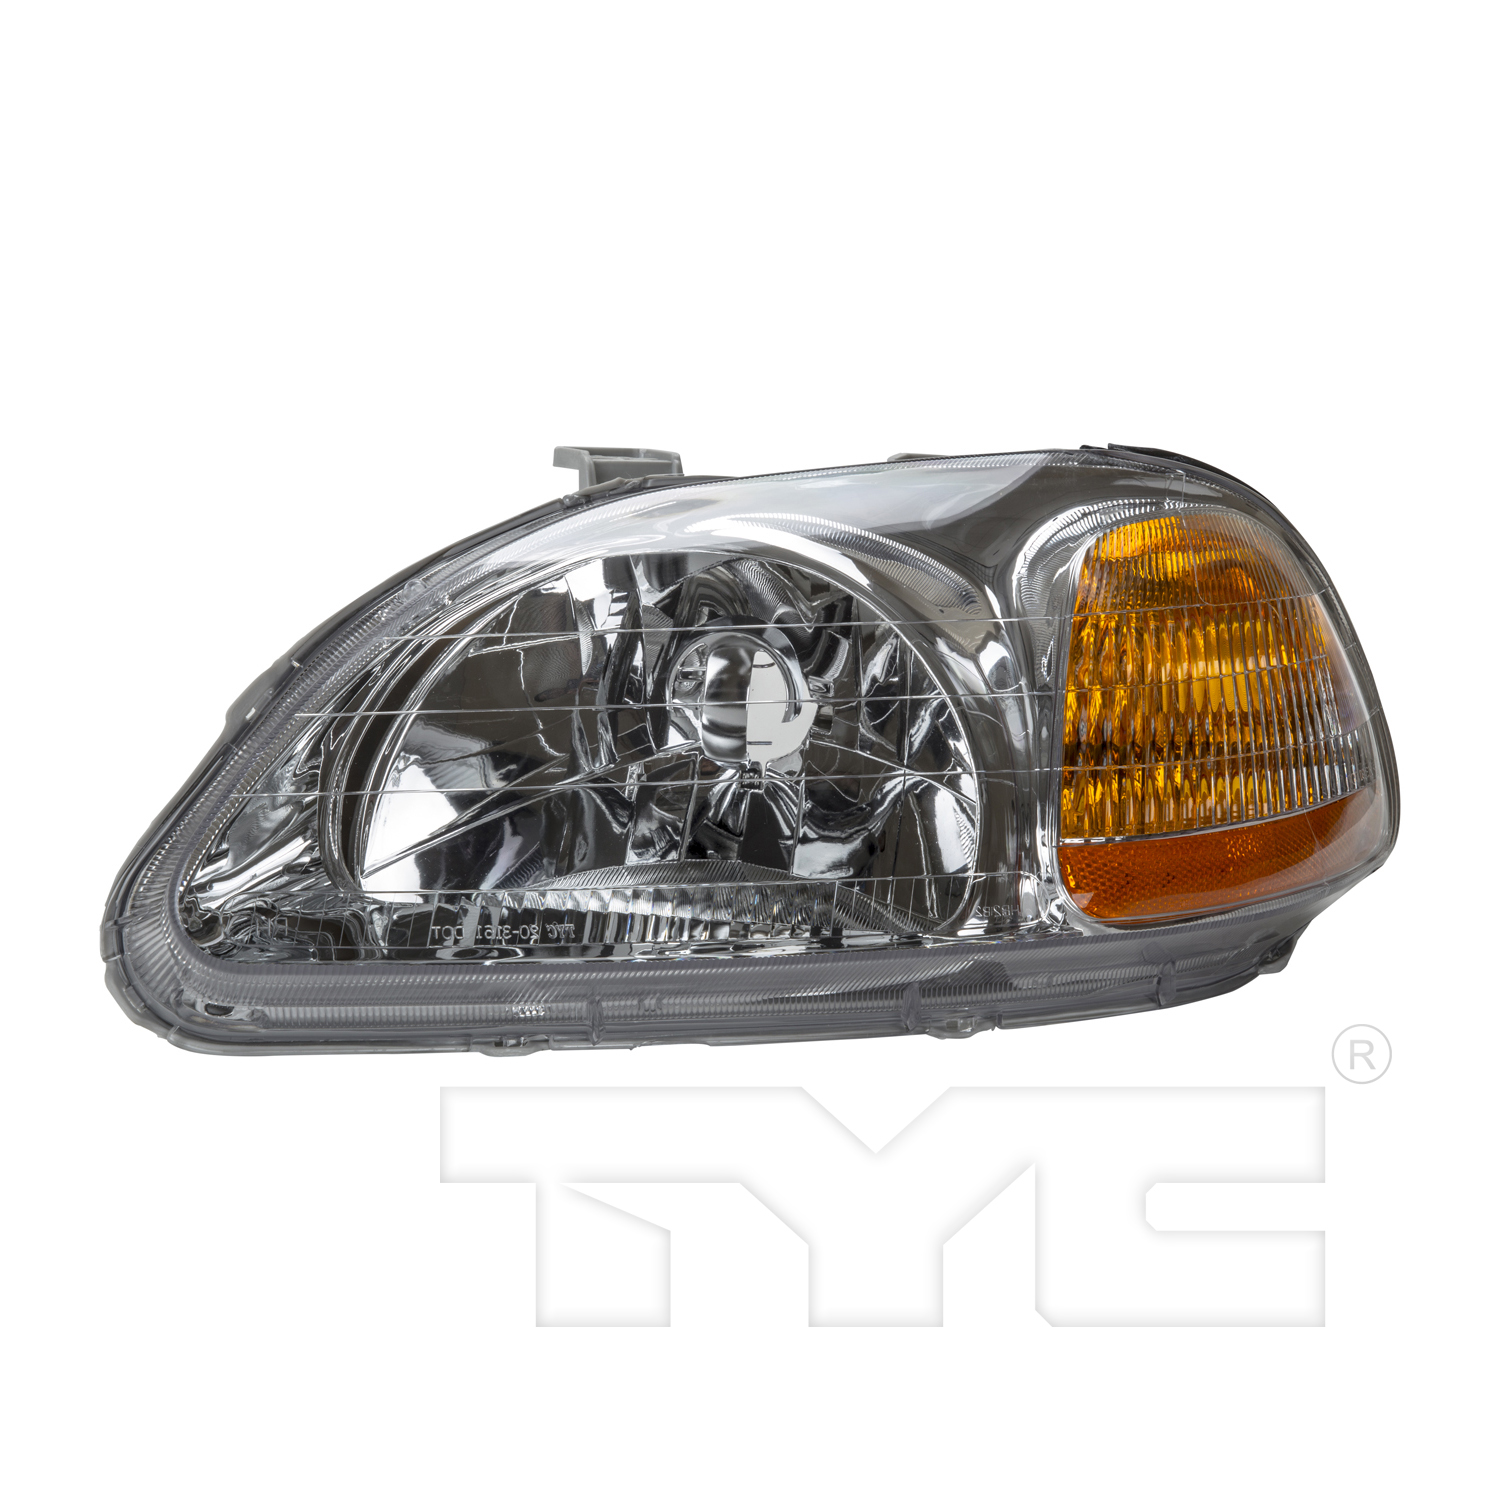 Aftermarket HEADLIGHTS for HONDA - CIVIC, CIVIC,96-98,LT Headlamp assy composite